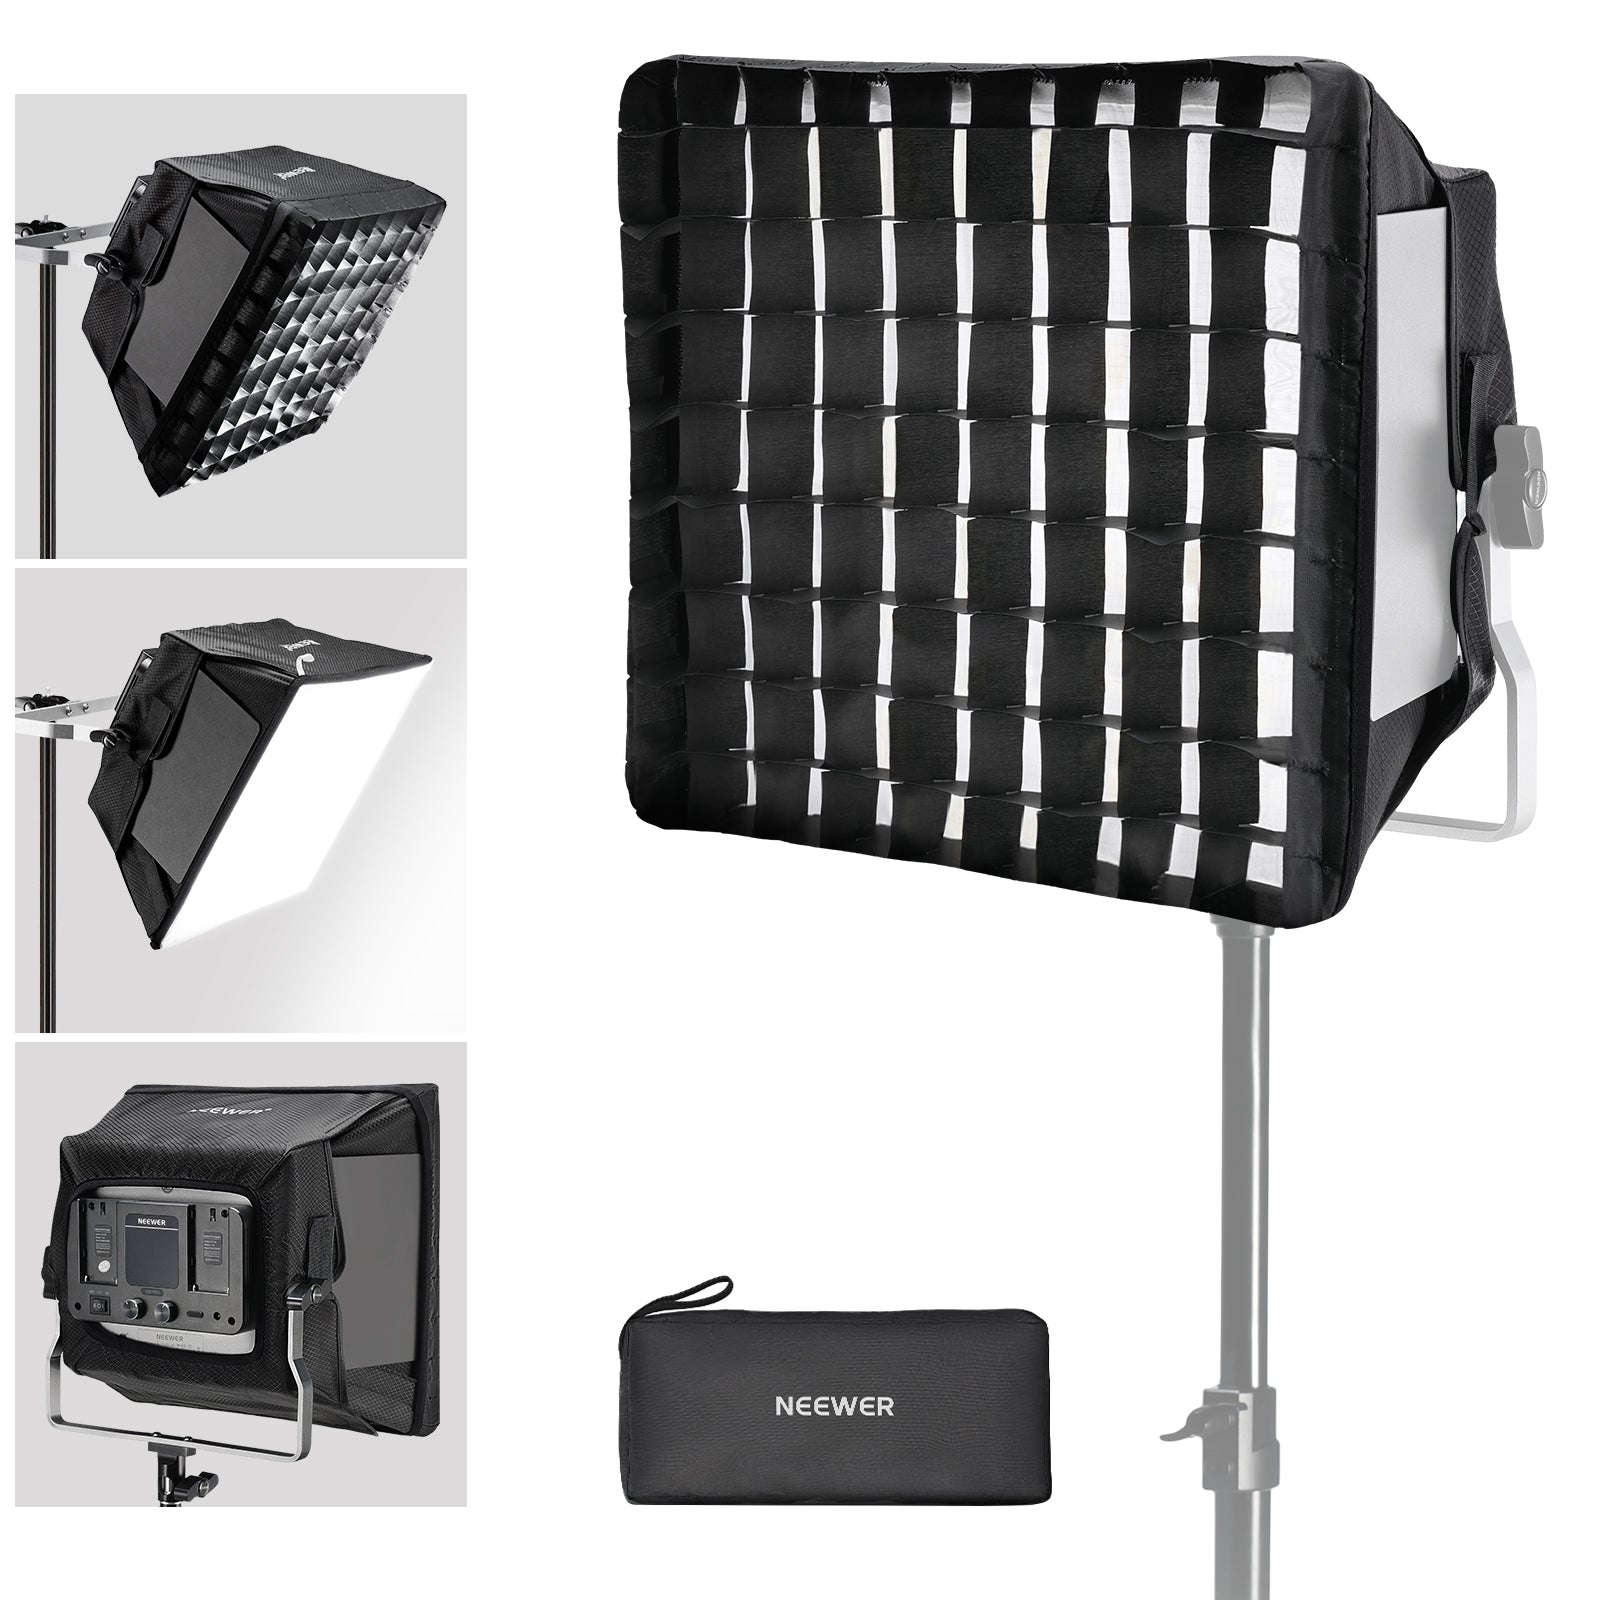 Neewer RGB LED Video Light with APP Control 50W 660 PRO Video Lighting Kit